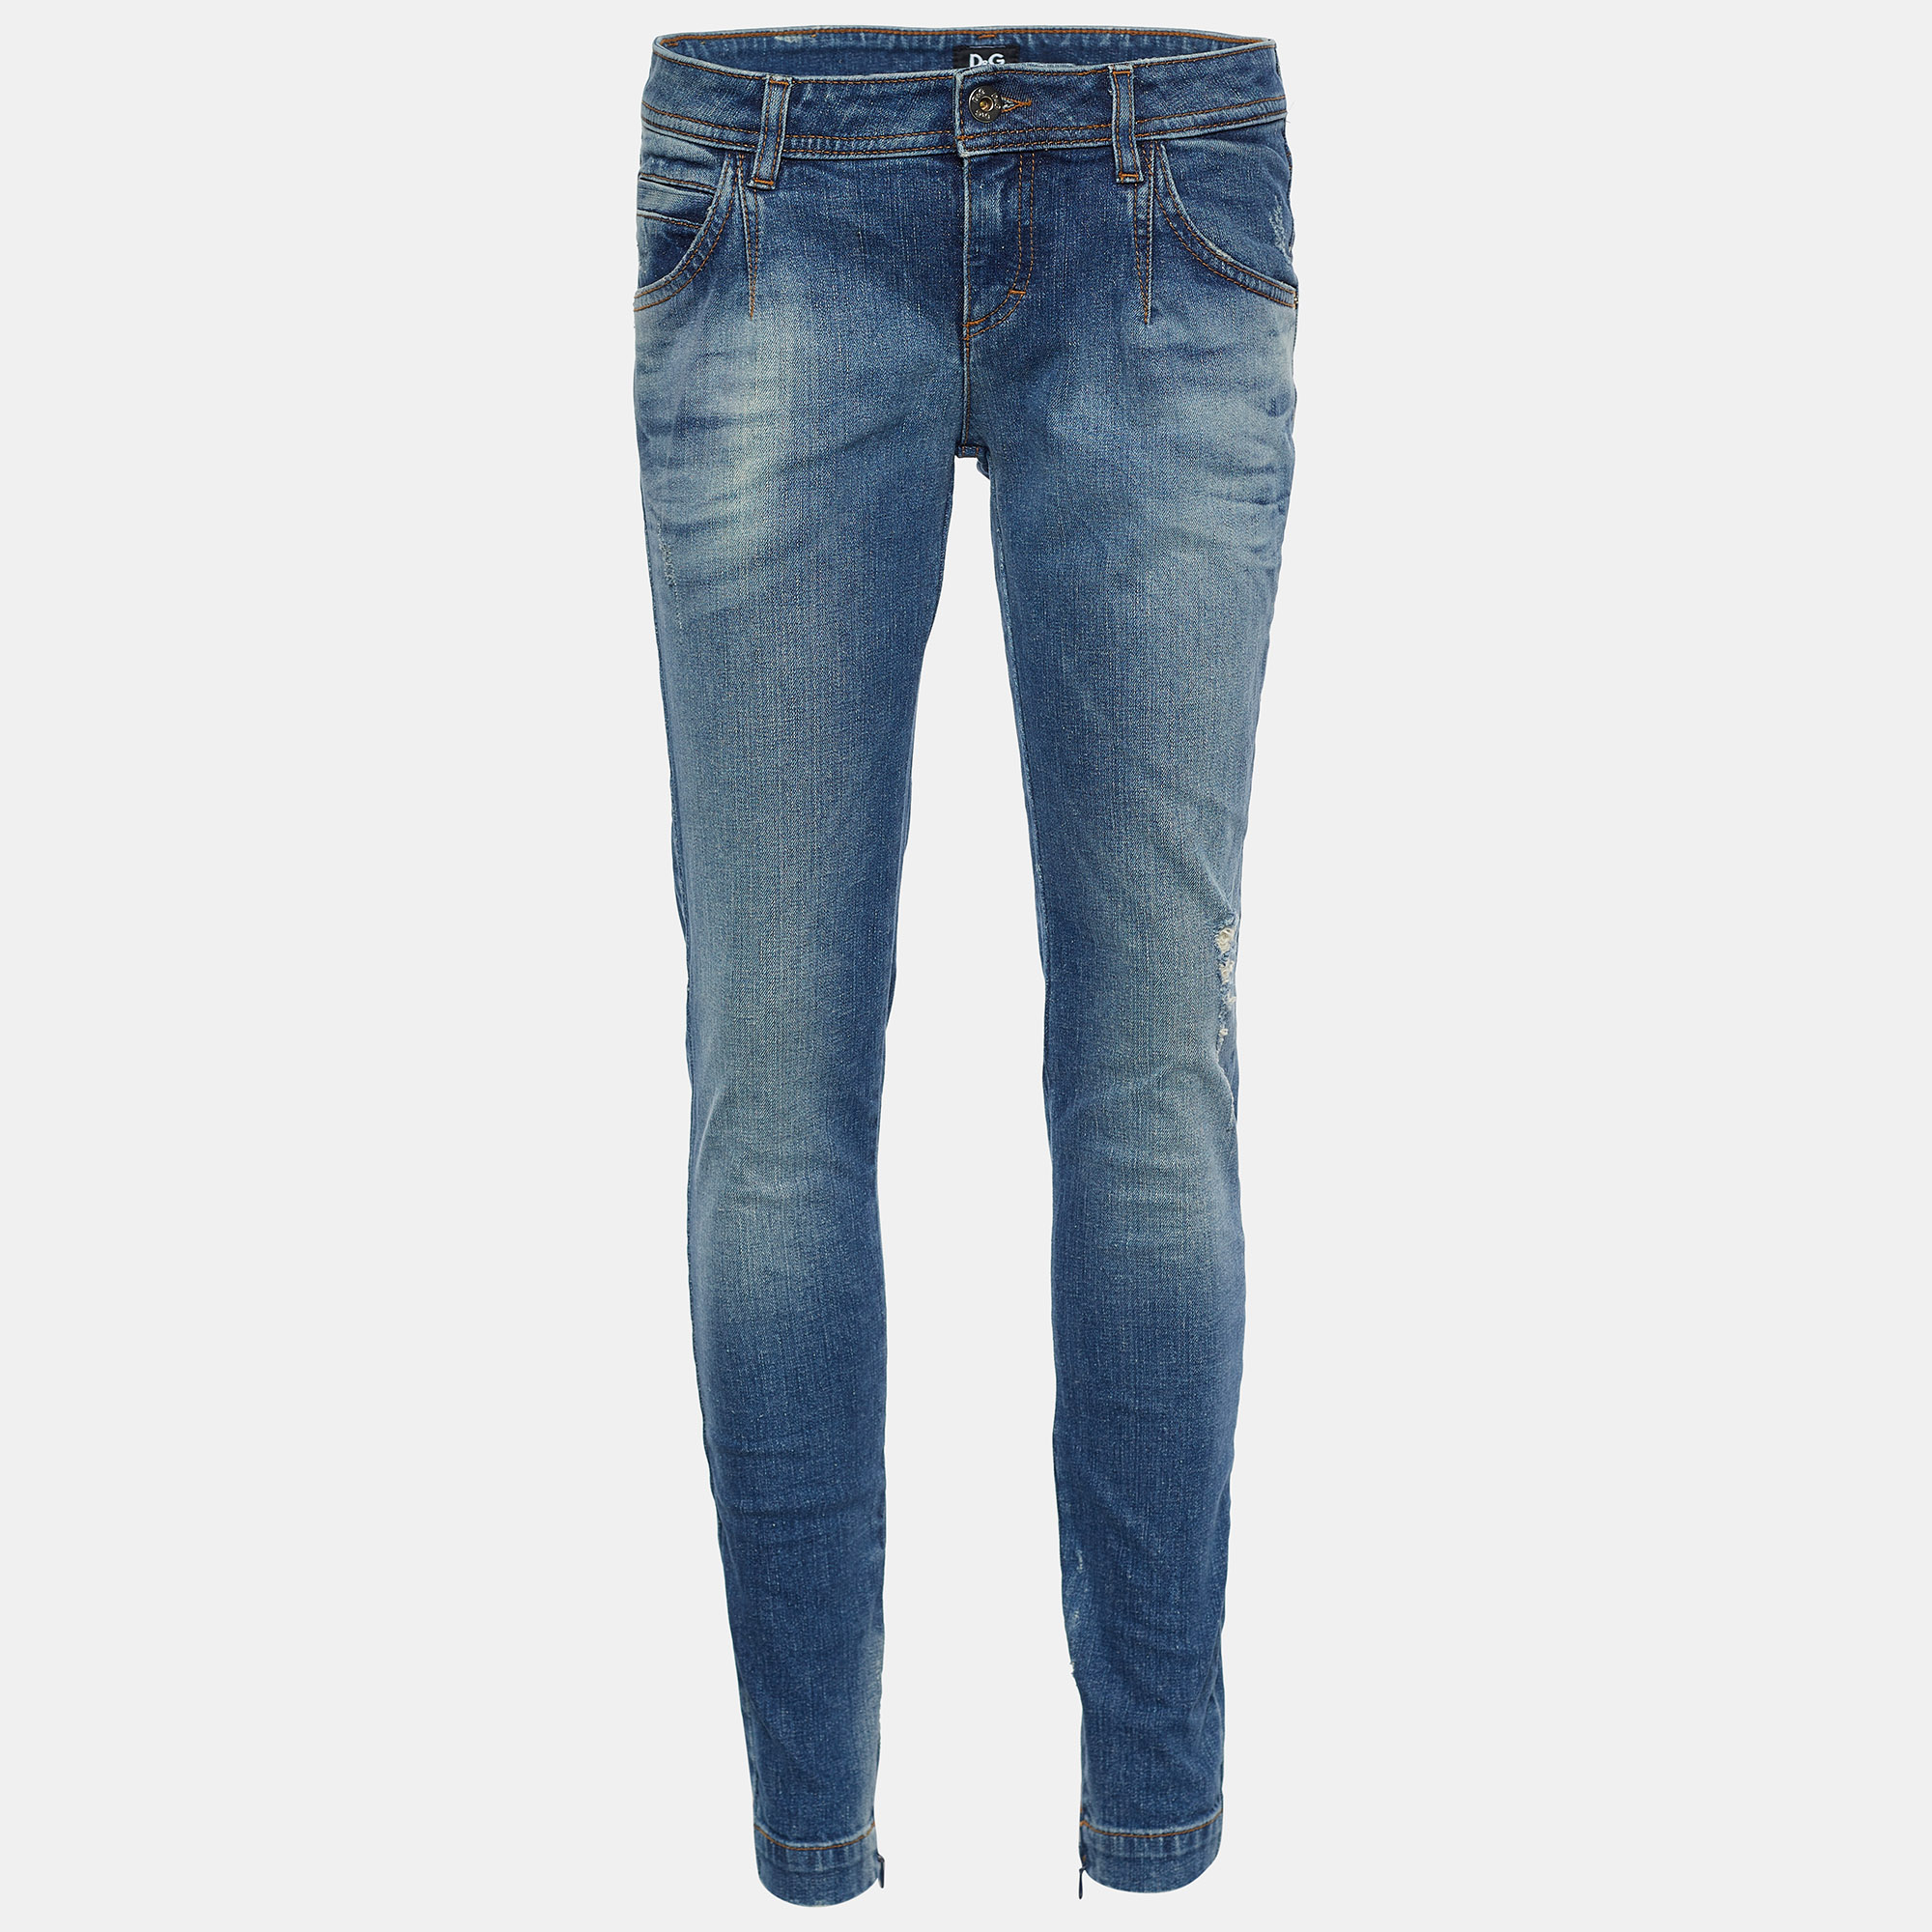 Dolce & gabbana d&g indigo distressed denim pretty skinny jeans m